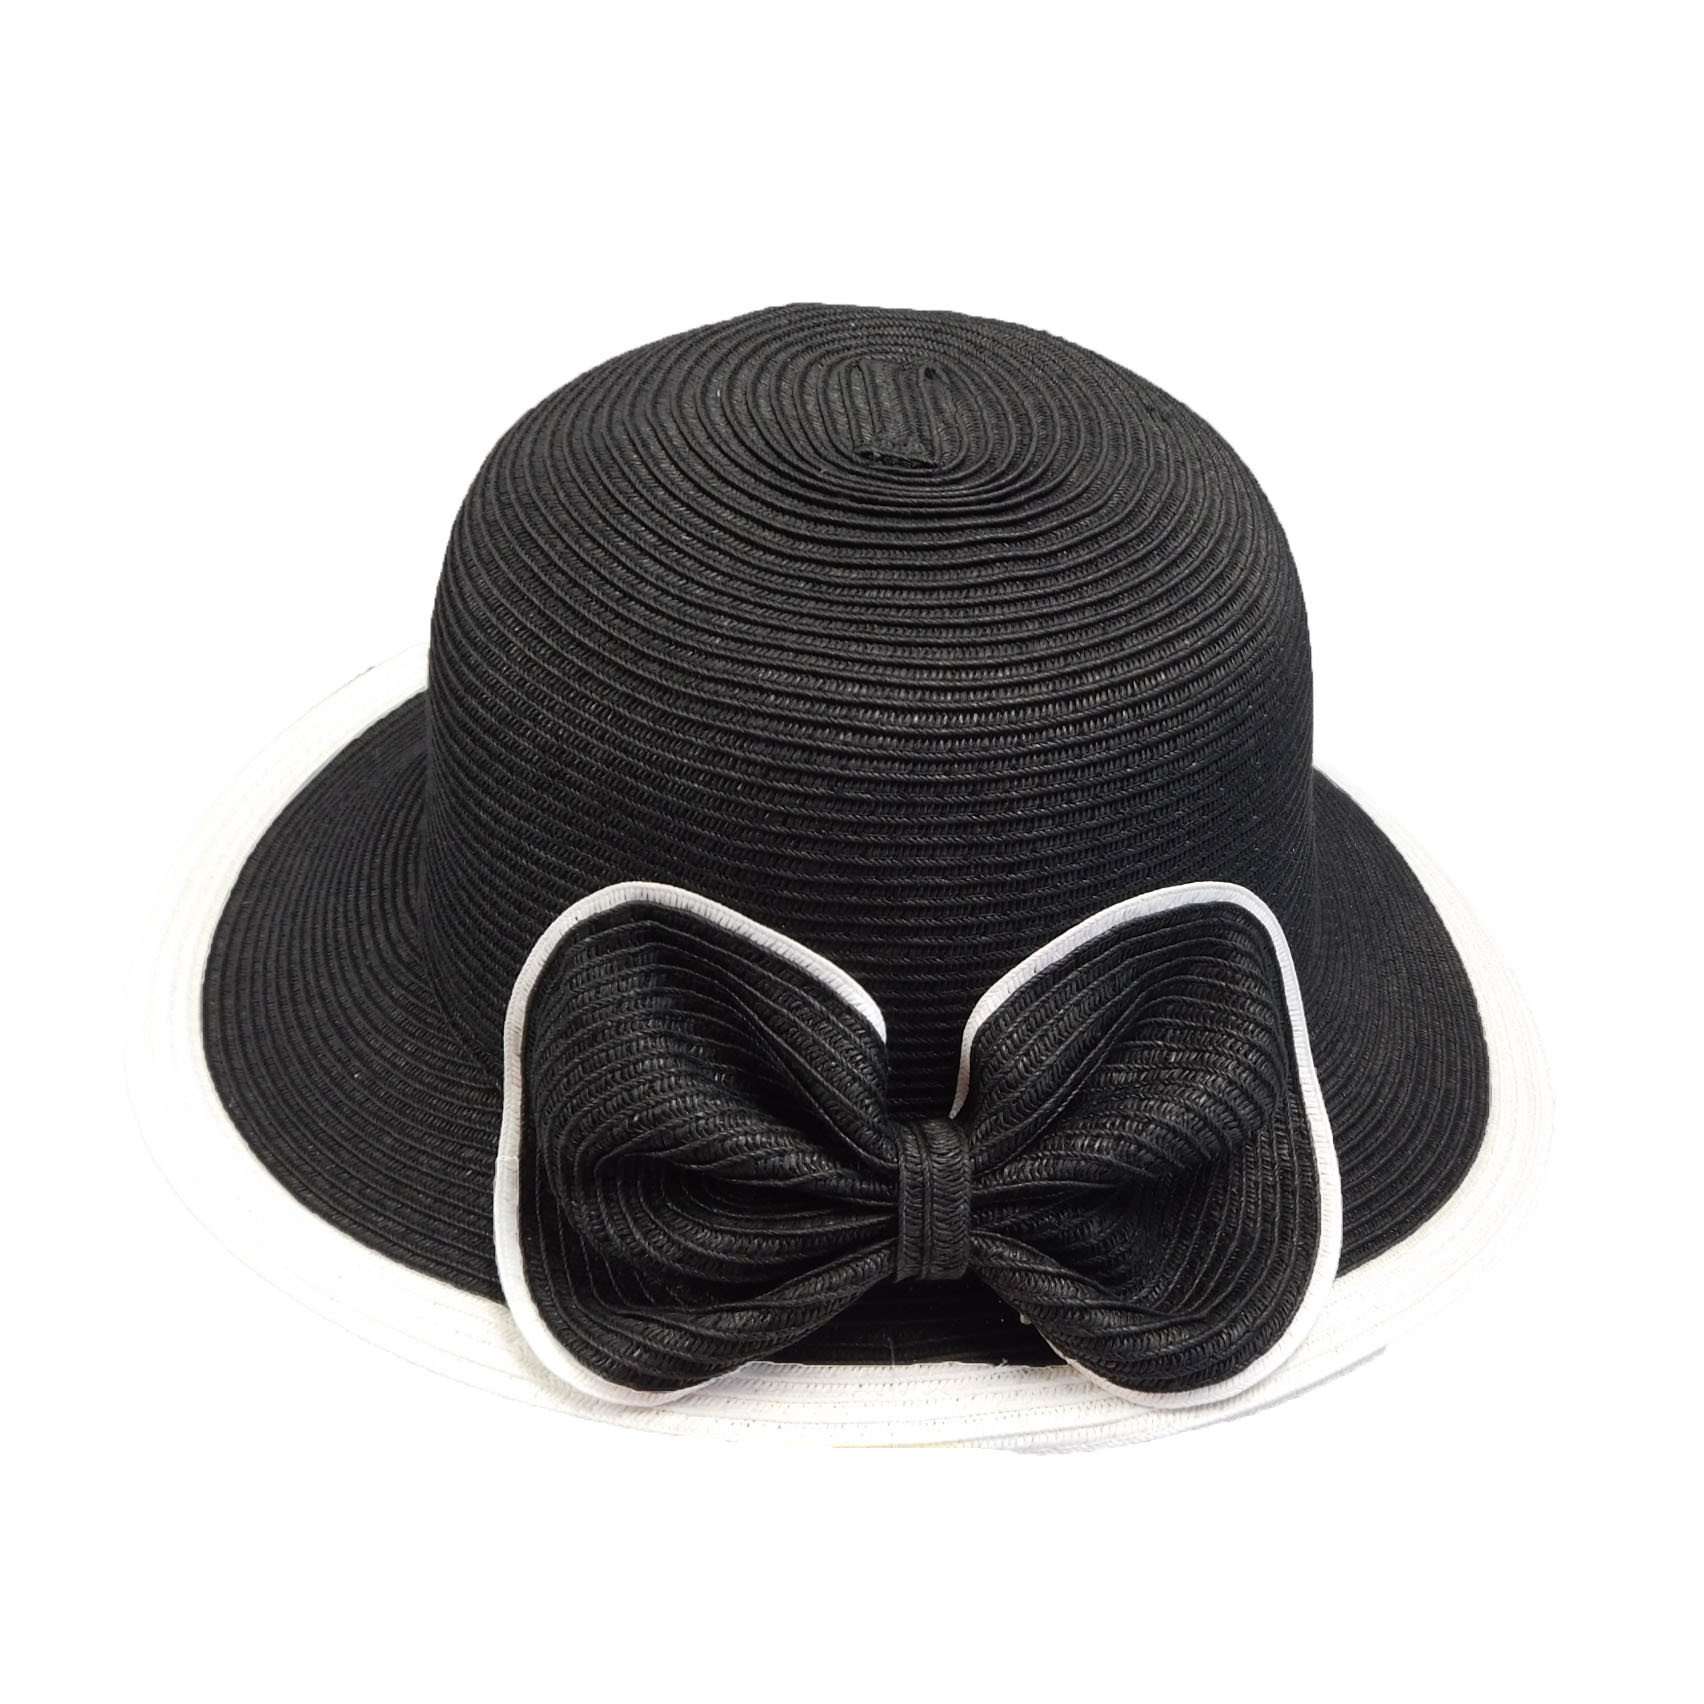 Black and White Sun Hat with Large Straw Bow - DNMC Hats Wide Brim Hat Boardwalk Style Hats da761BK Black Medium (57 cm) 